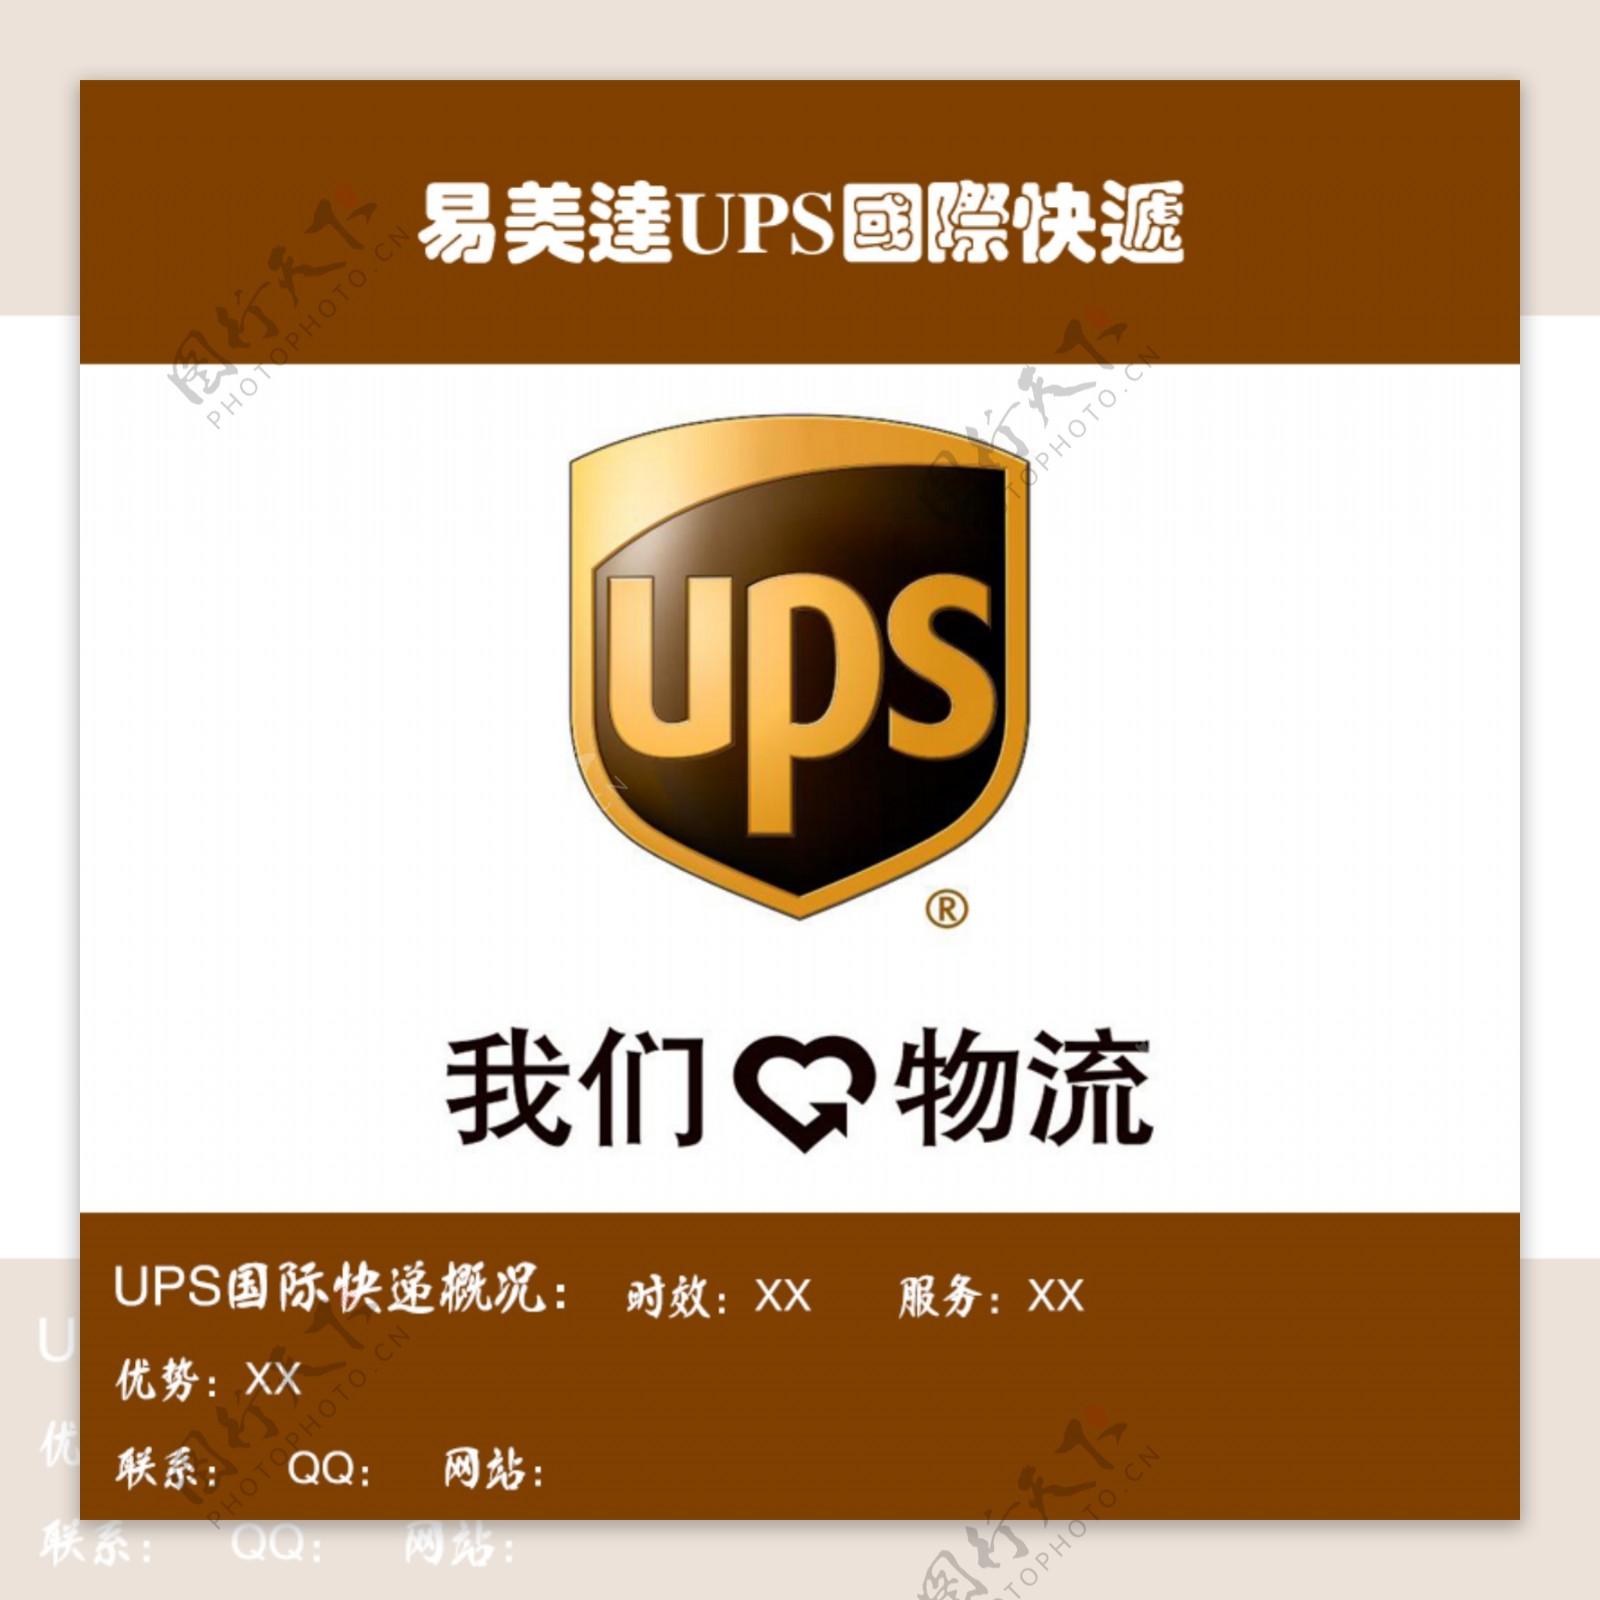 UPS国际快递宣传模板